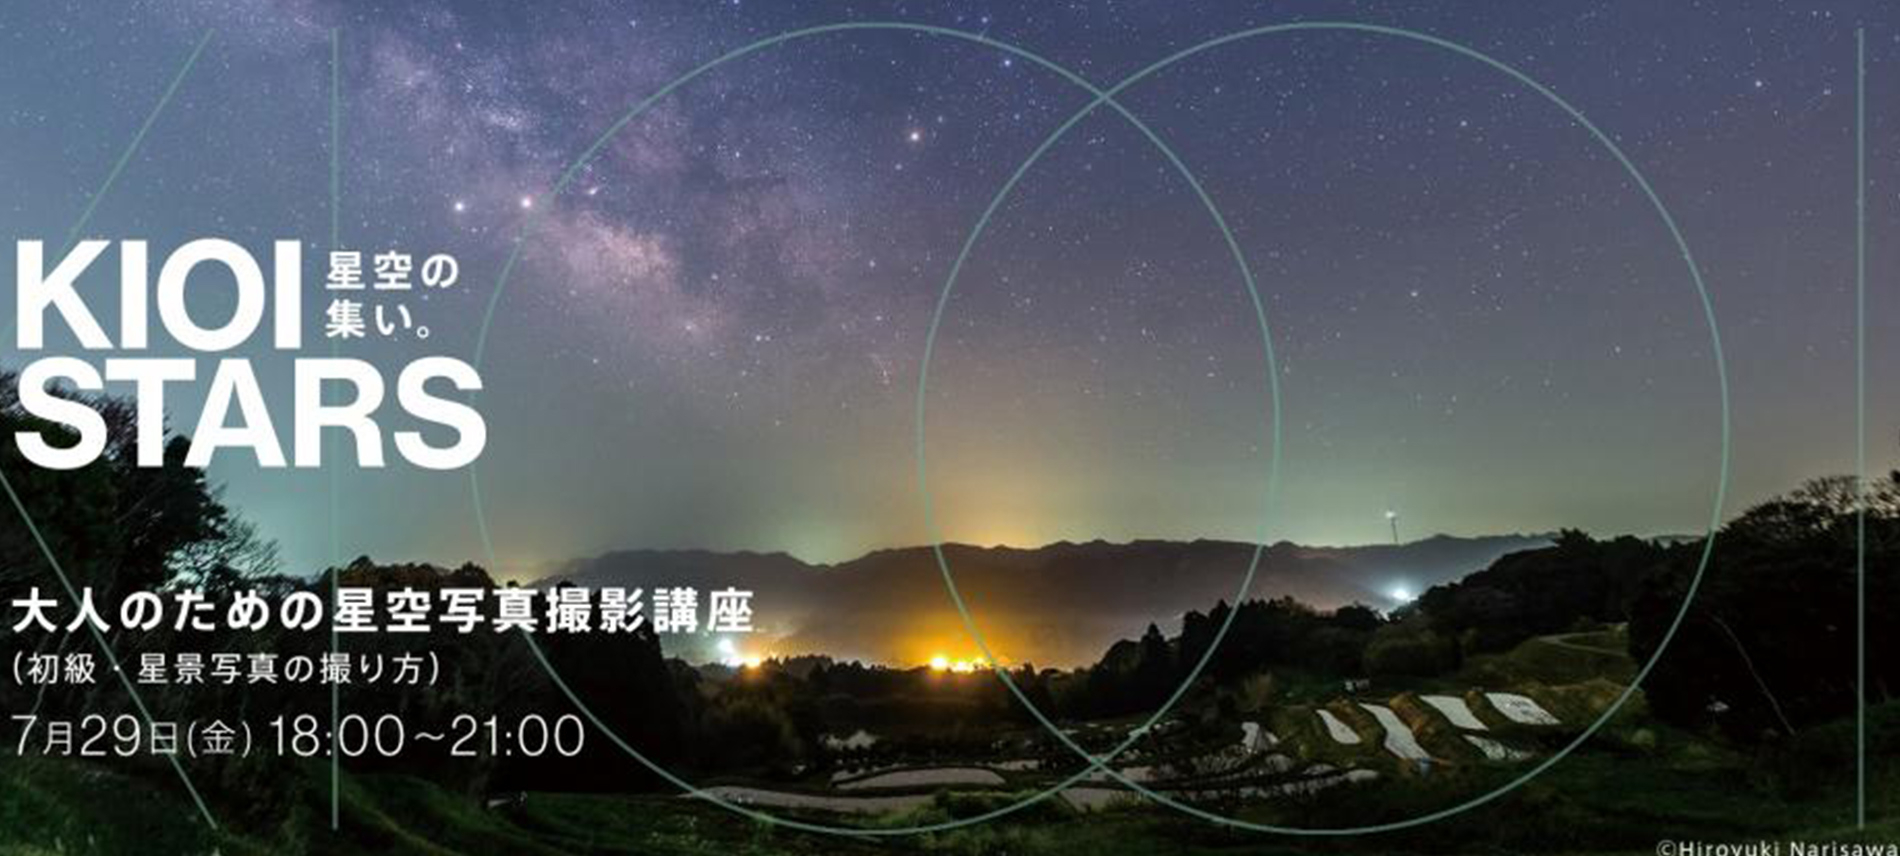 KIOI STARS 星空の集い。―大人のための星空写真撮影講座（初級・星景写真の撮り方）―